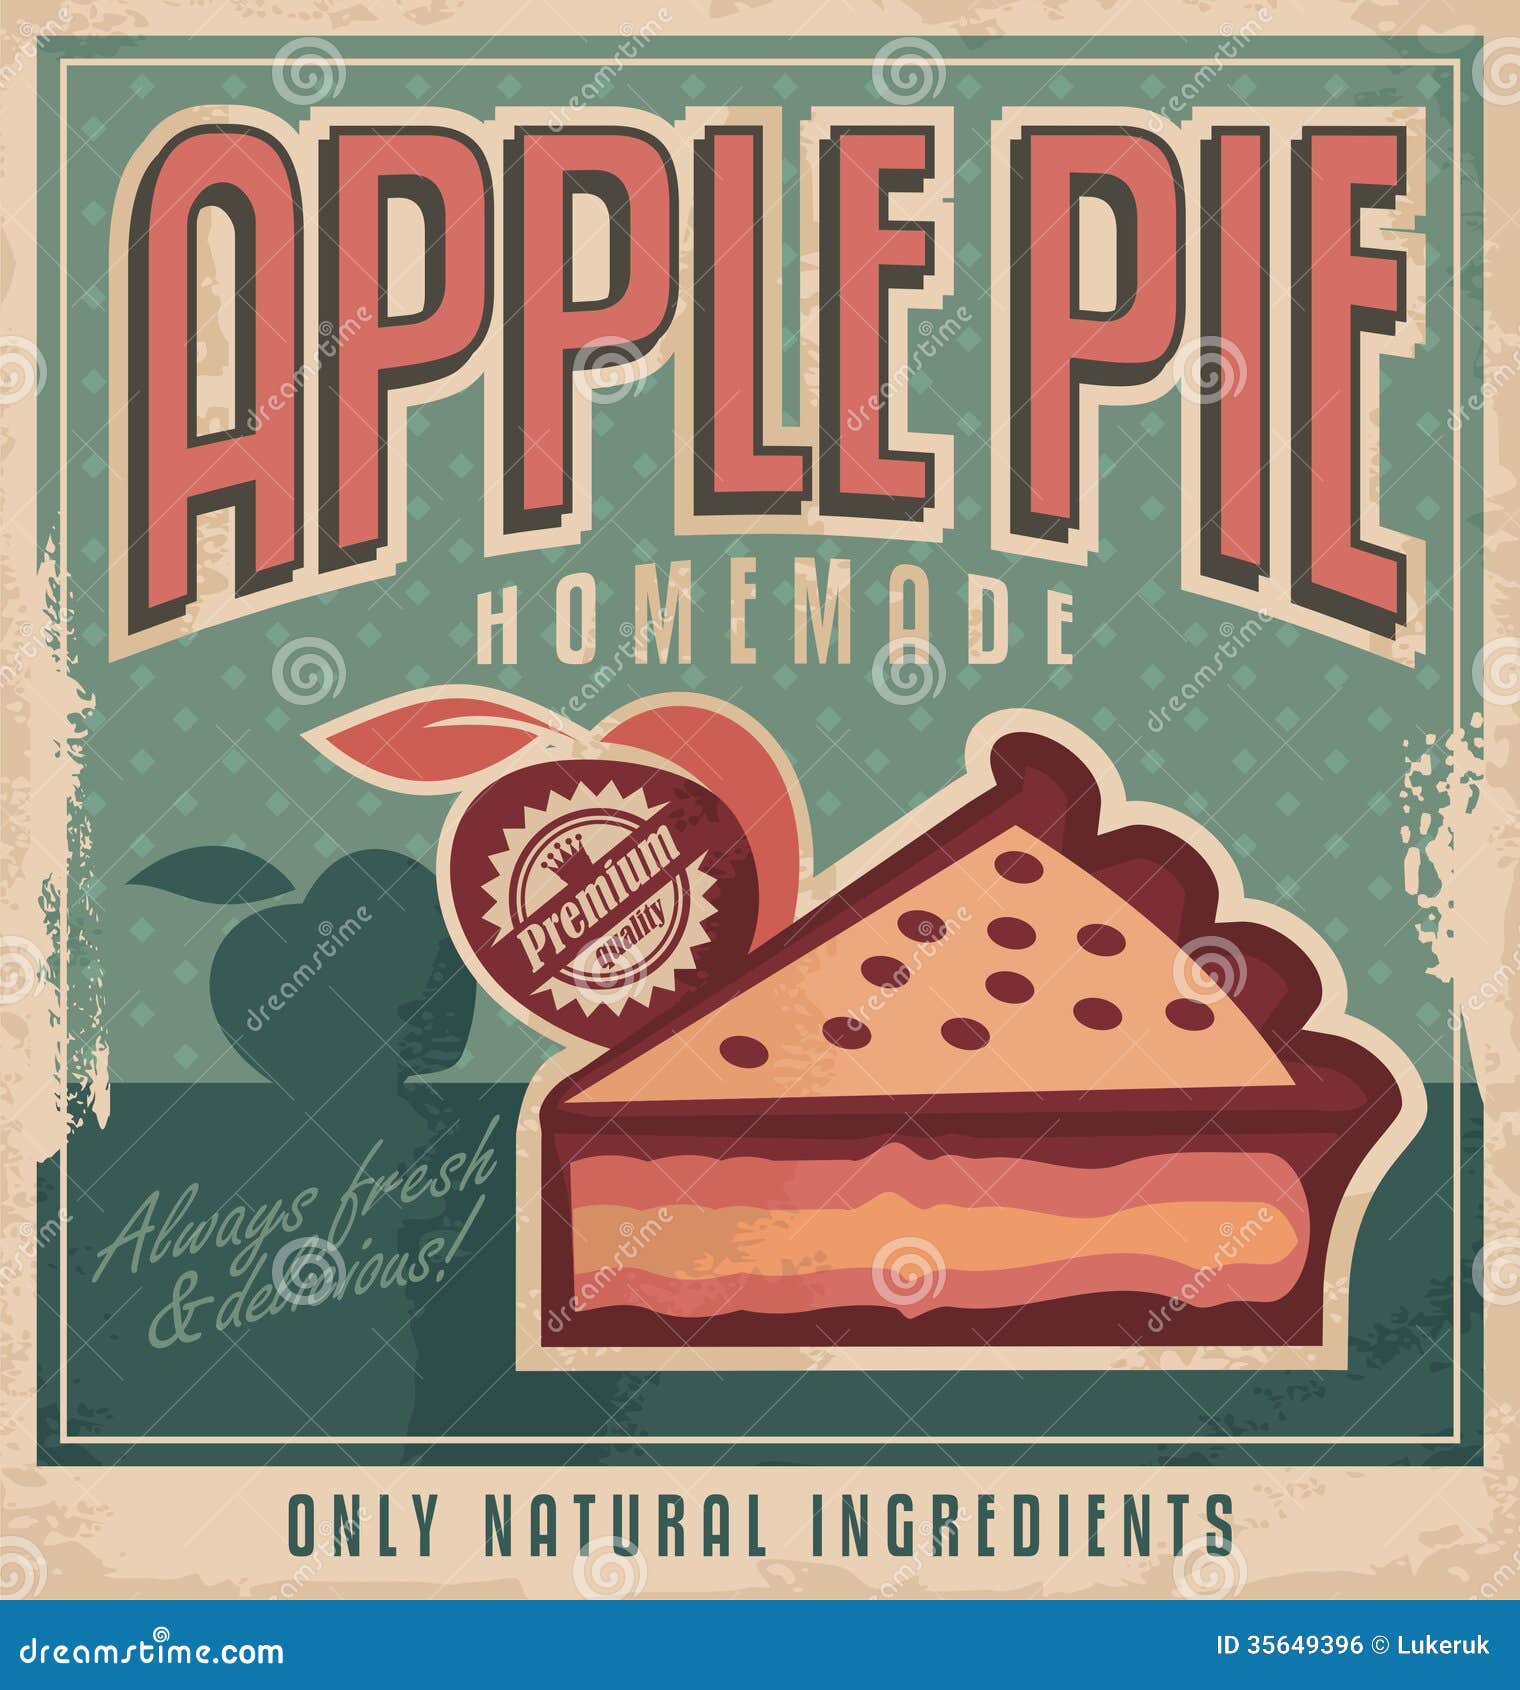 retro poster  for apple pie